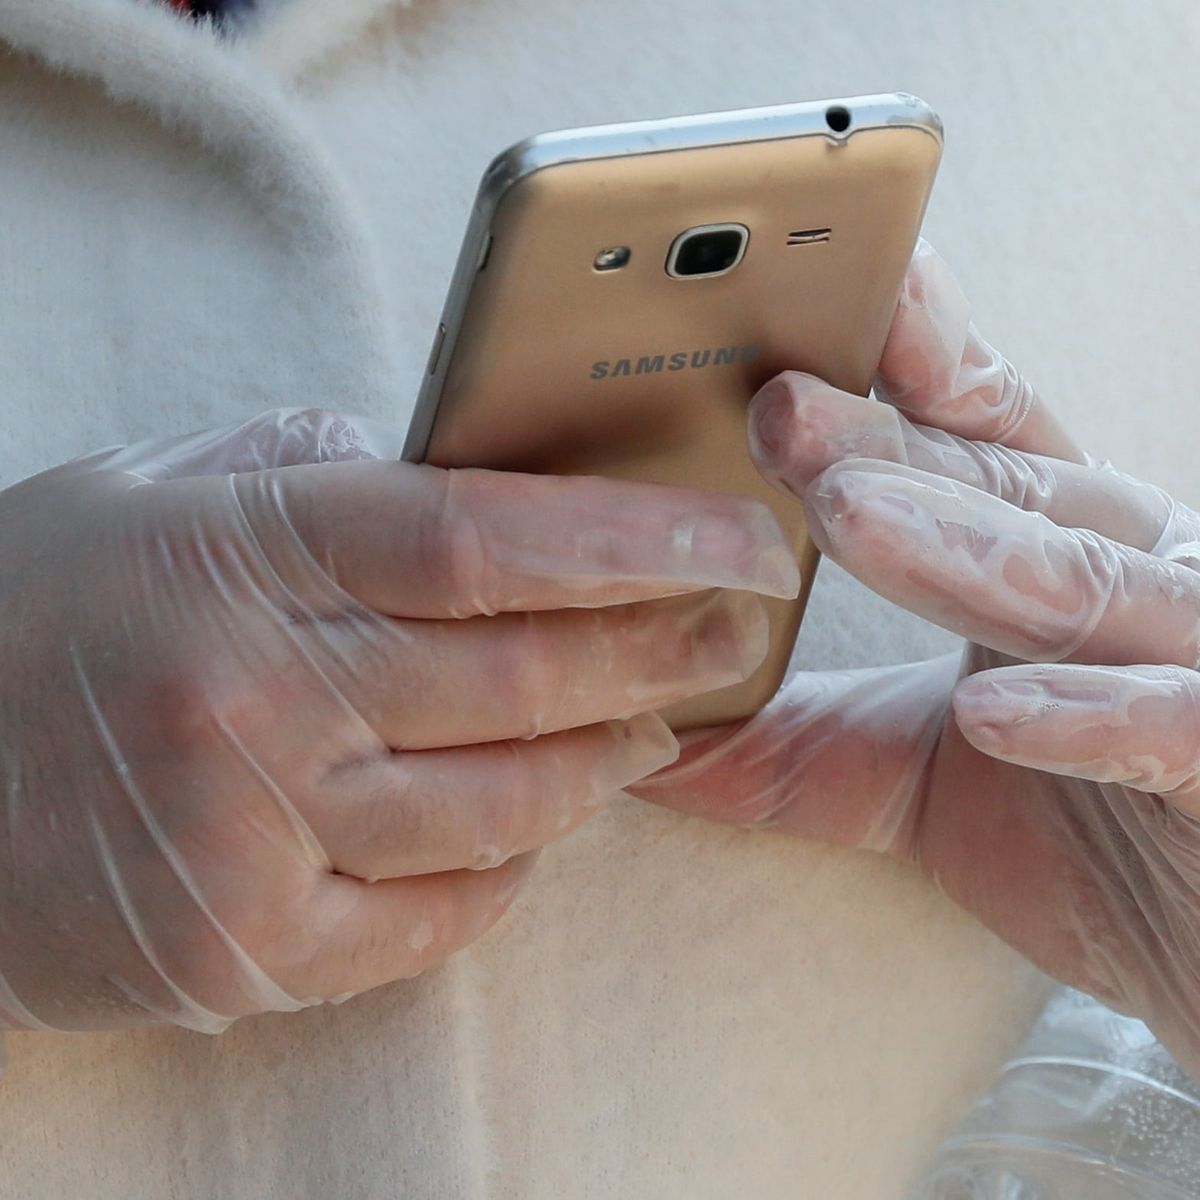 10 guantes táctiles perfectos para seguir usando el móvil en días de frío  intenso